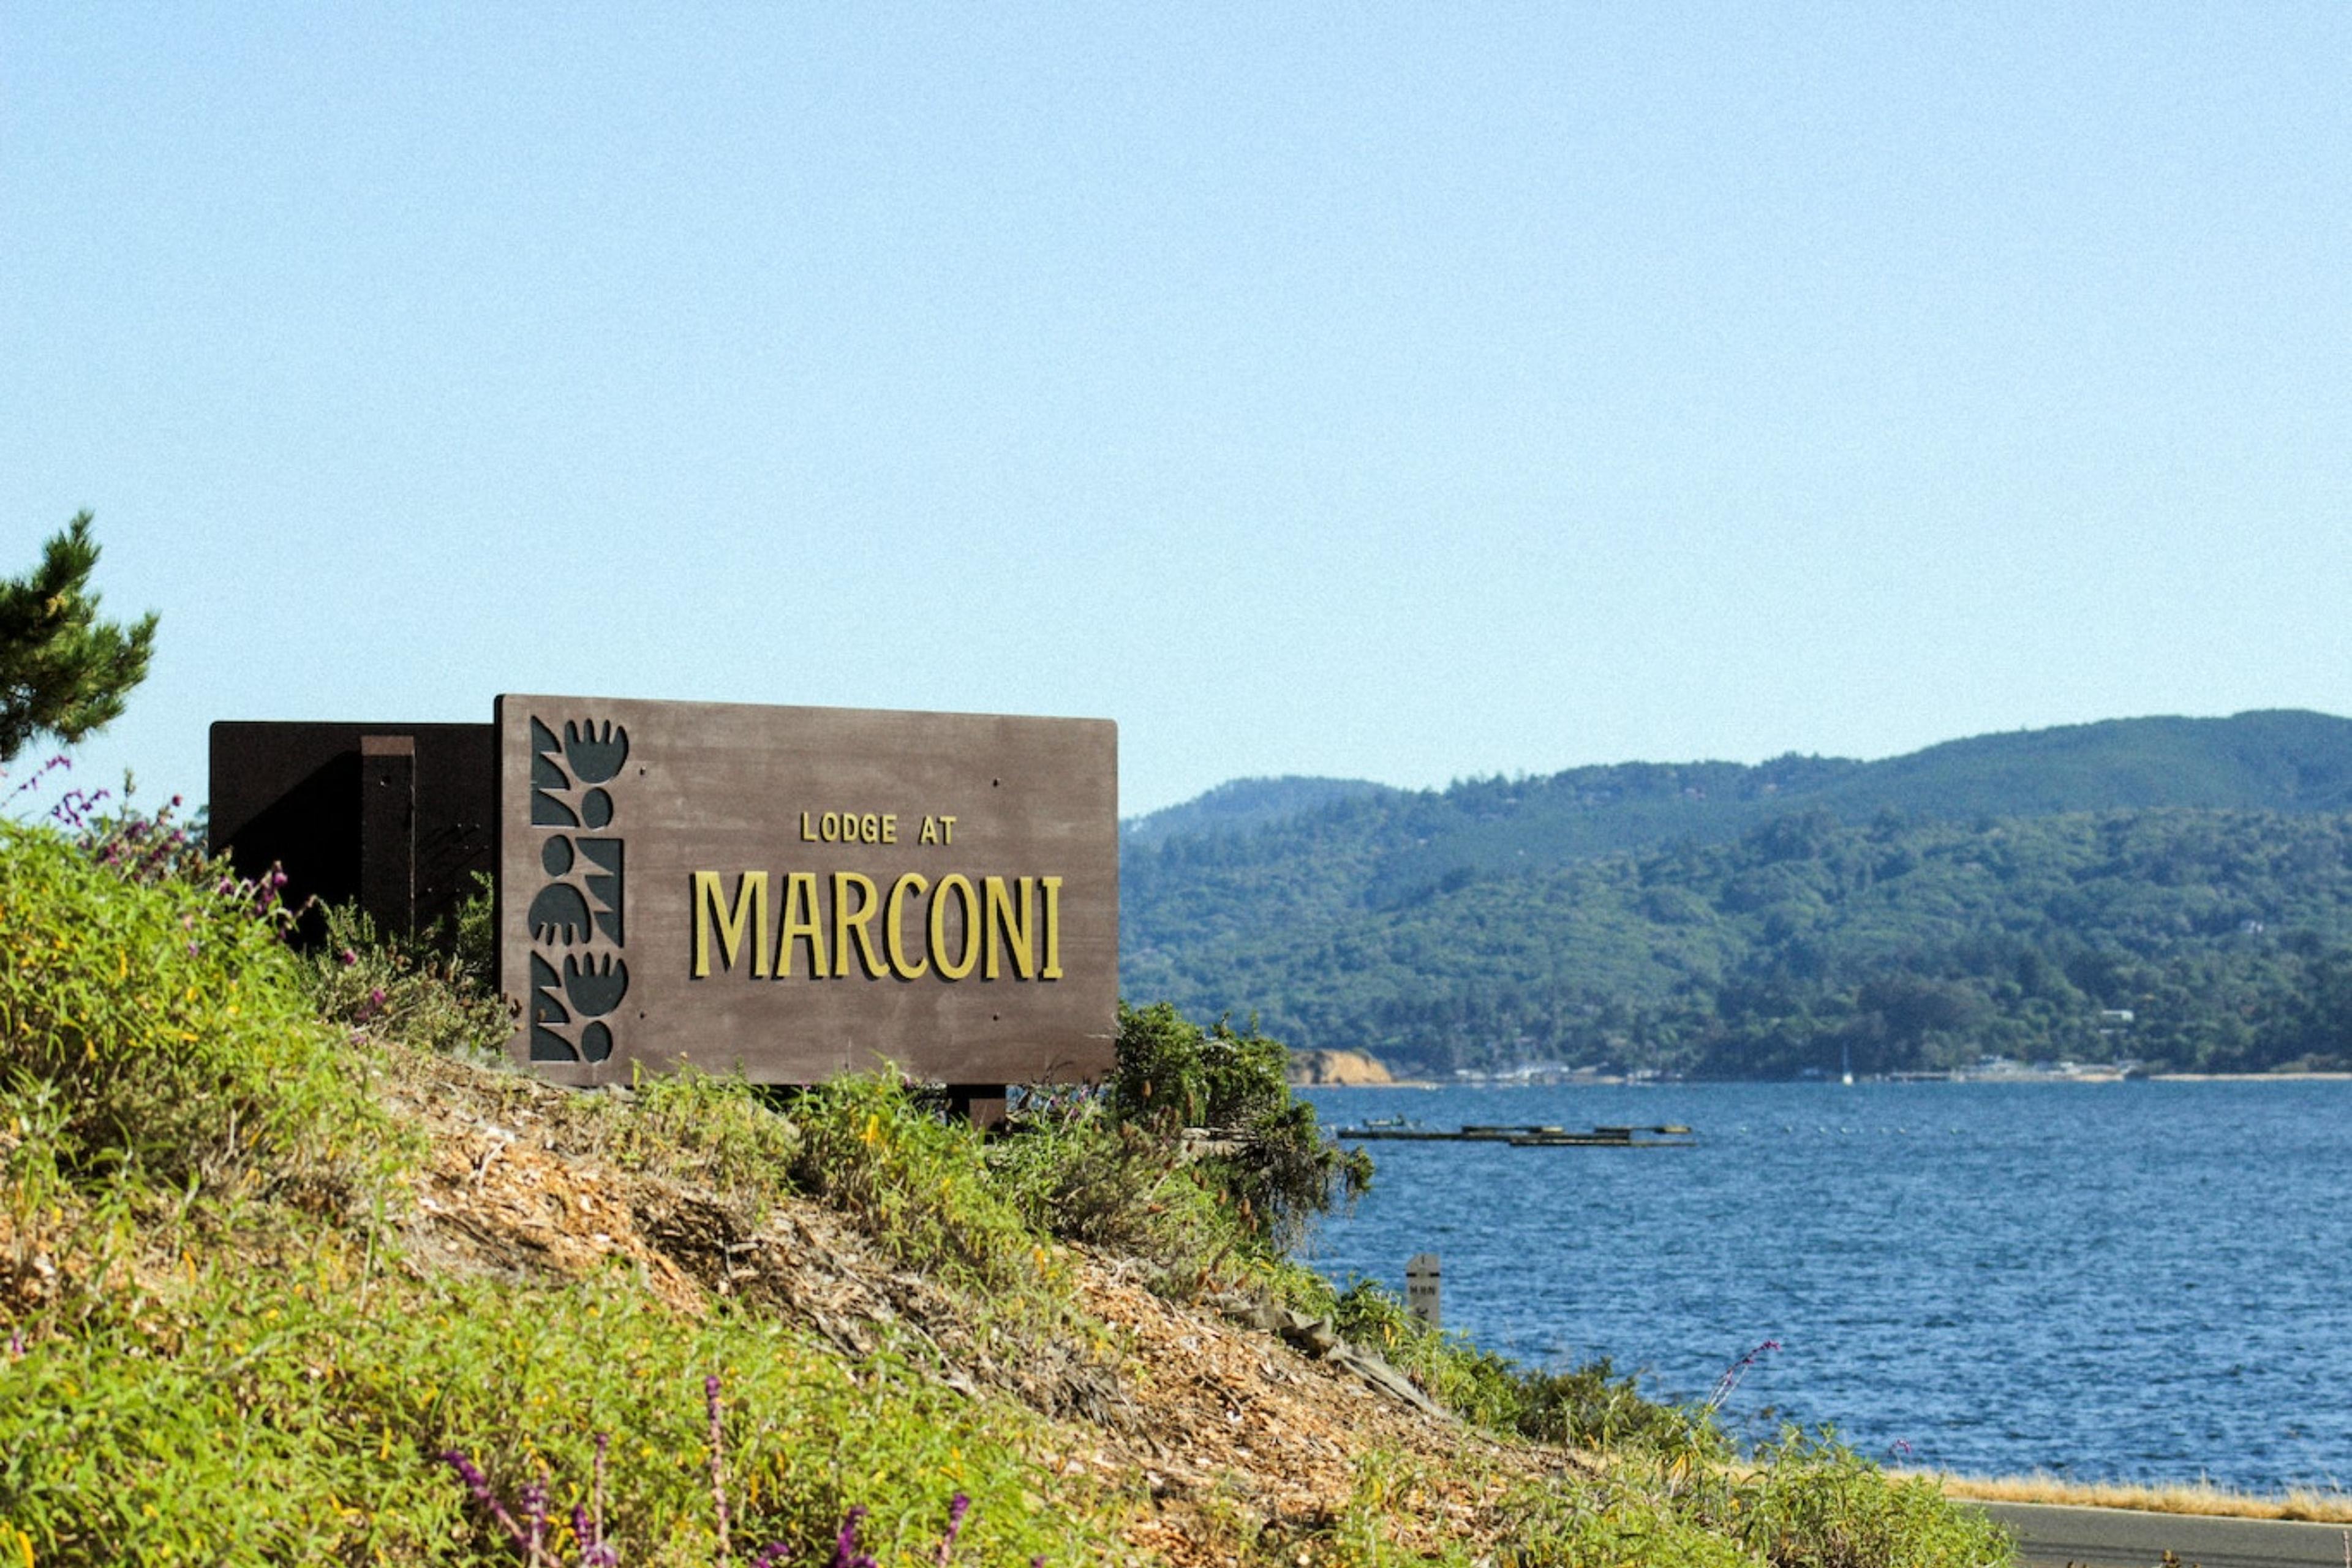 Lodge at Marconi